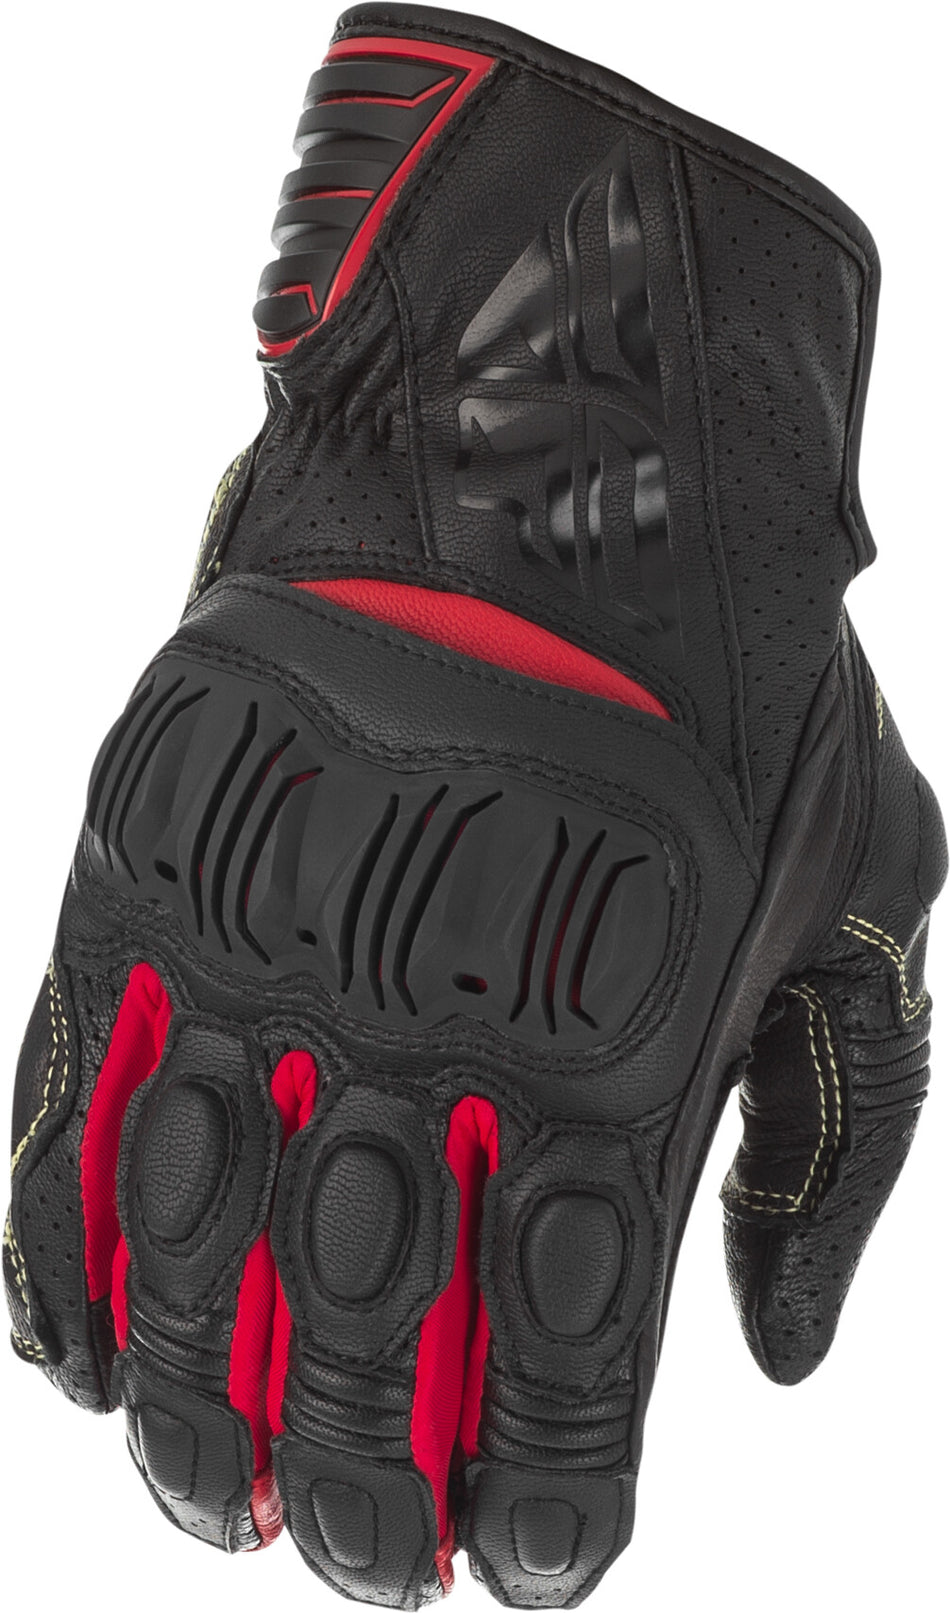 FLY RACING Brawler Gloves Black/Red Sm 476-2092S